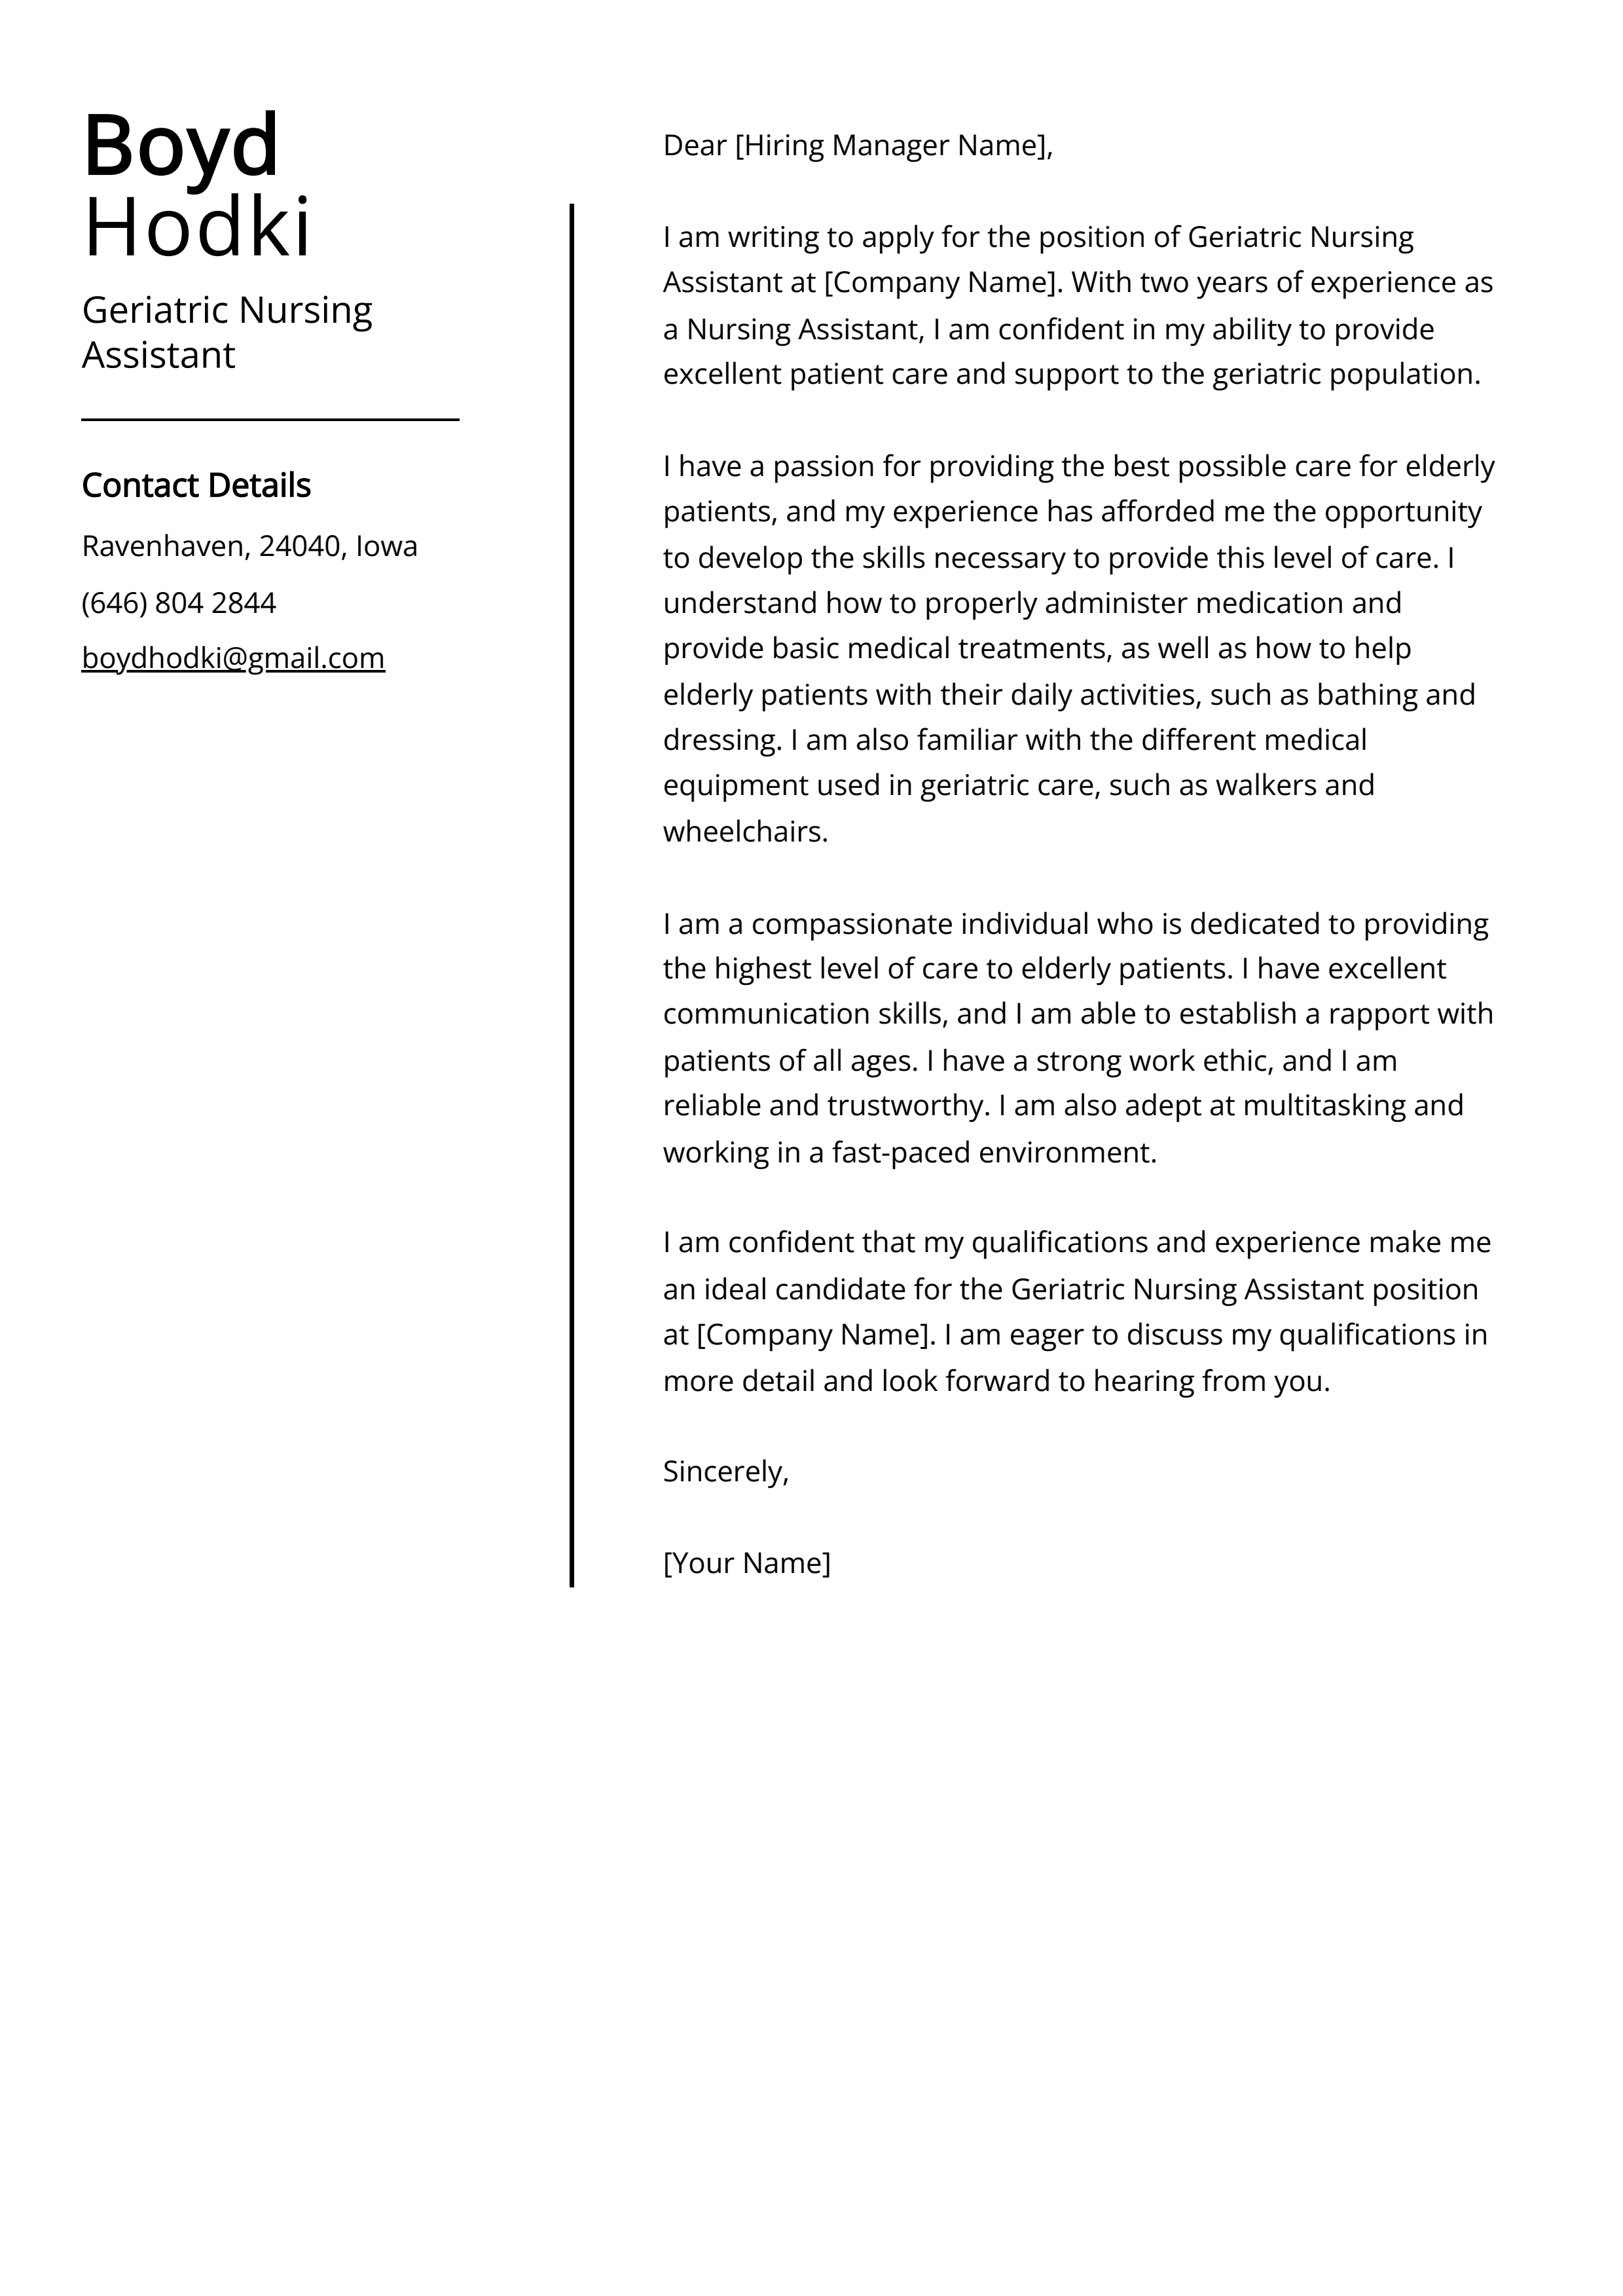 Geriatric Nursing Assistant Cover Letter Example